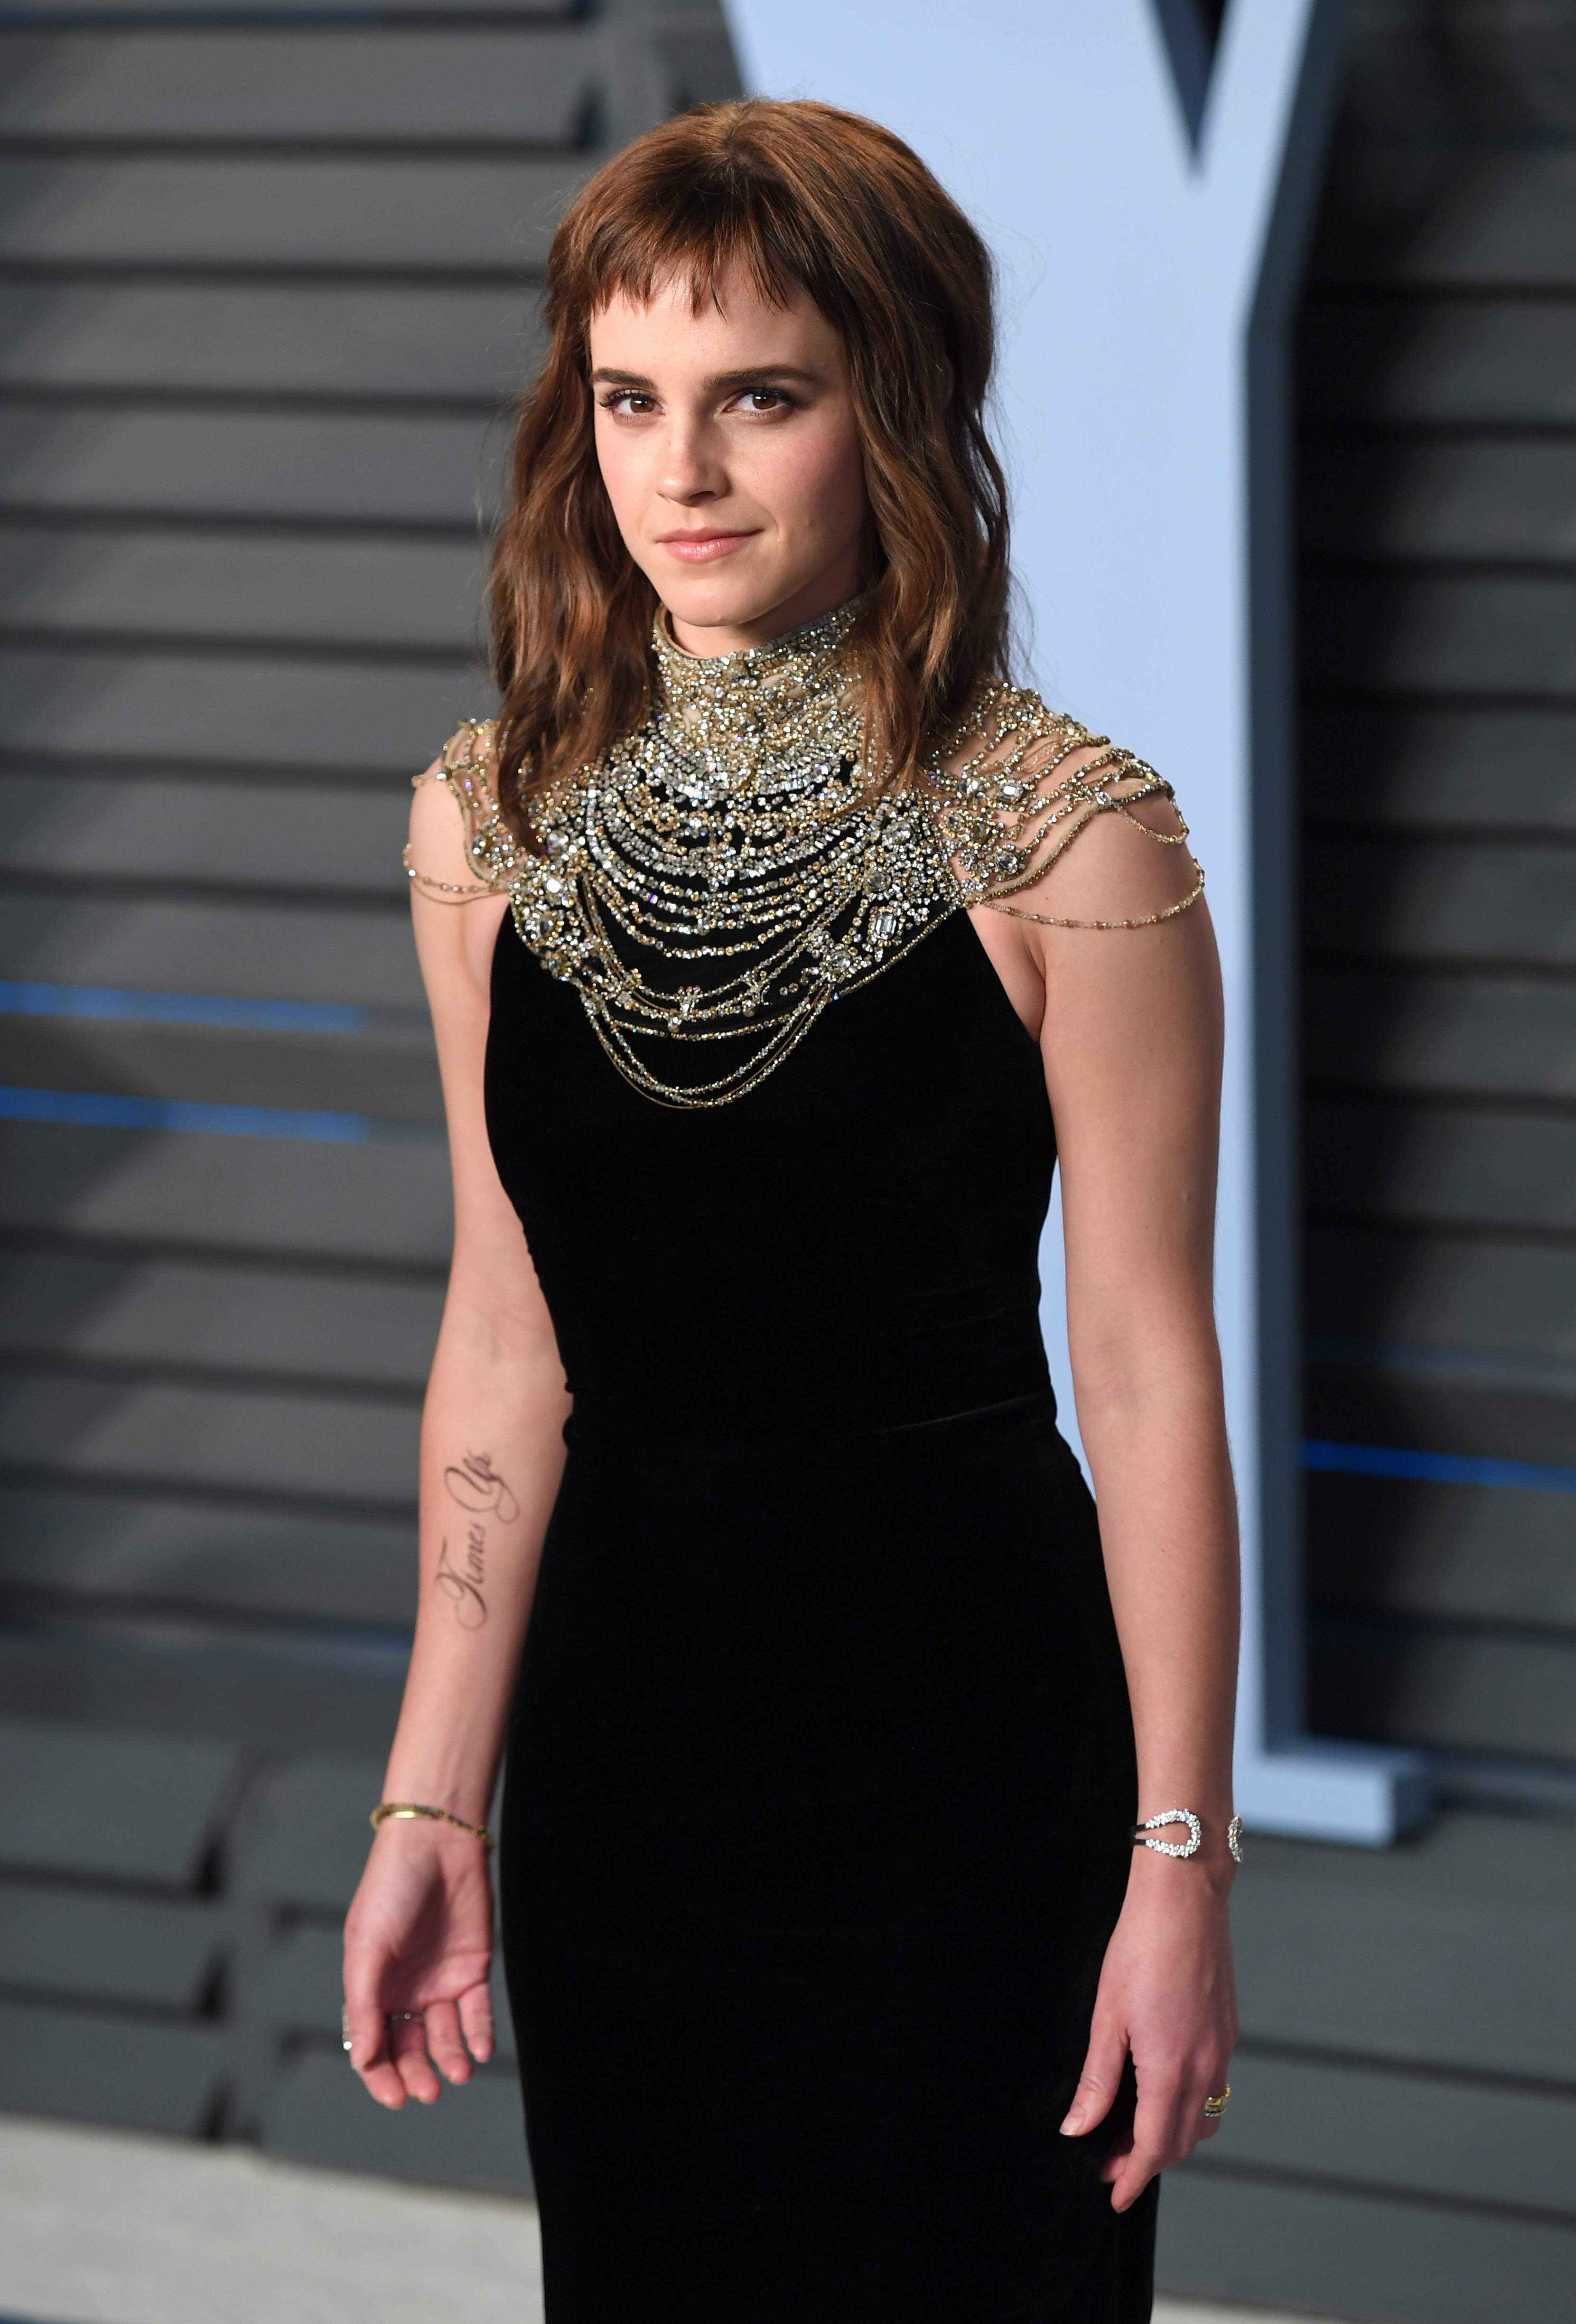 Emma Watson Times Up Tattoo - Emma Watson's New Oscars Tattoo Has a Typo